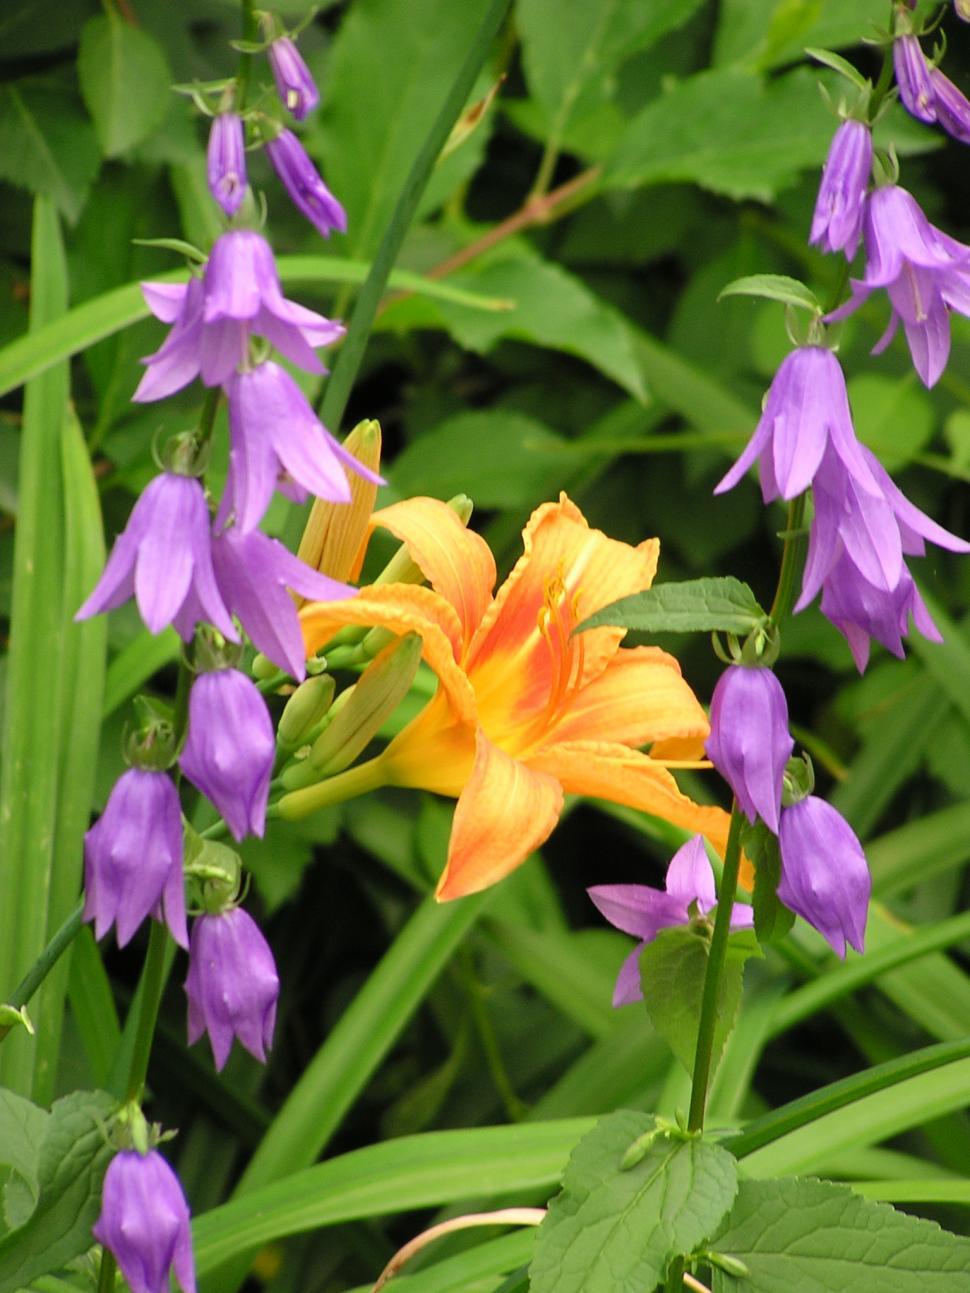 Free Image of Purple and Orange Flowers in Bloom 